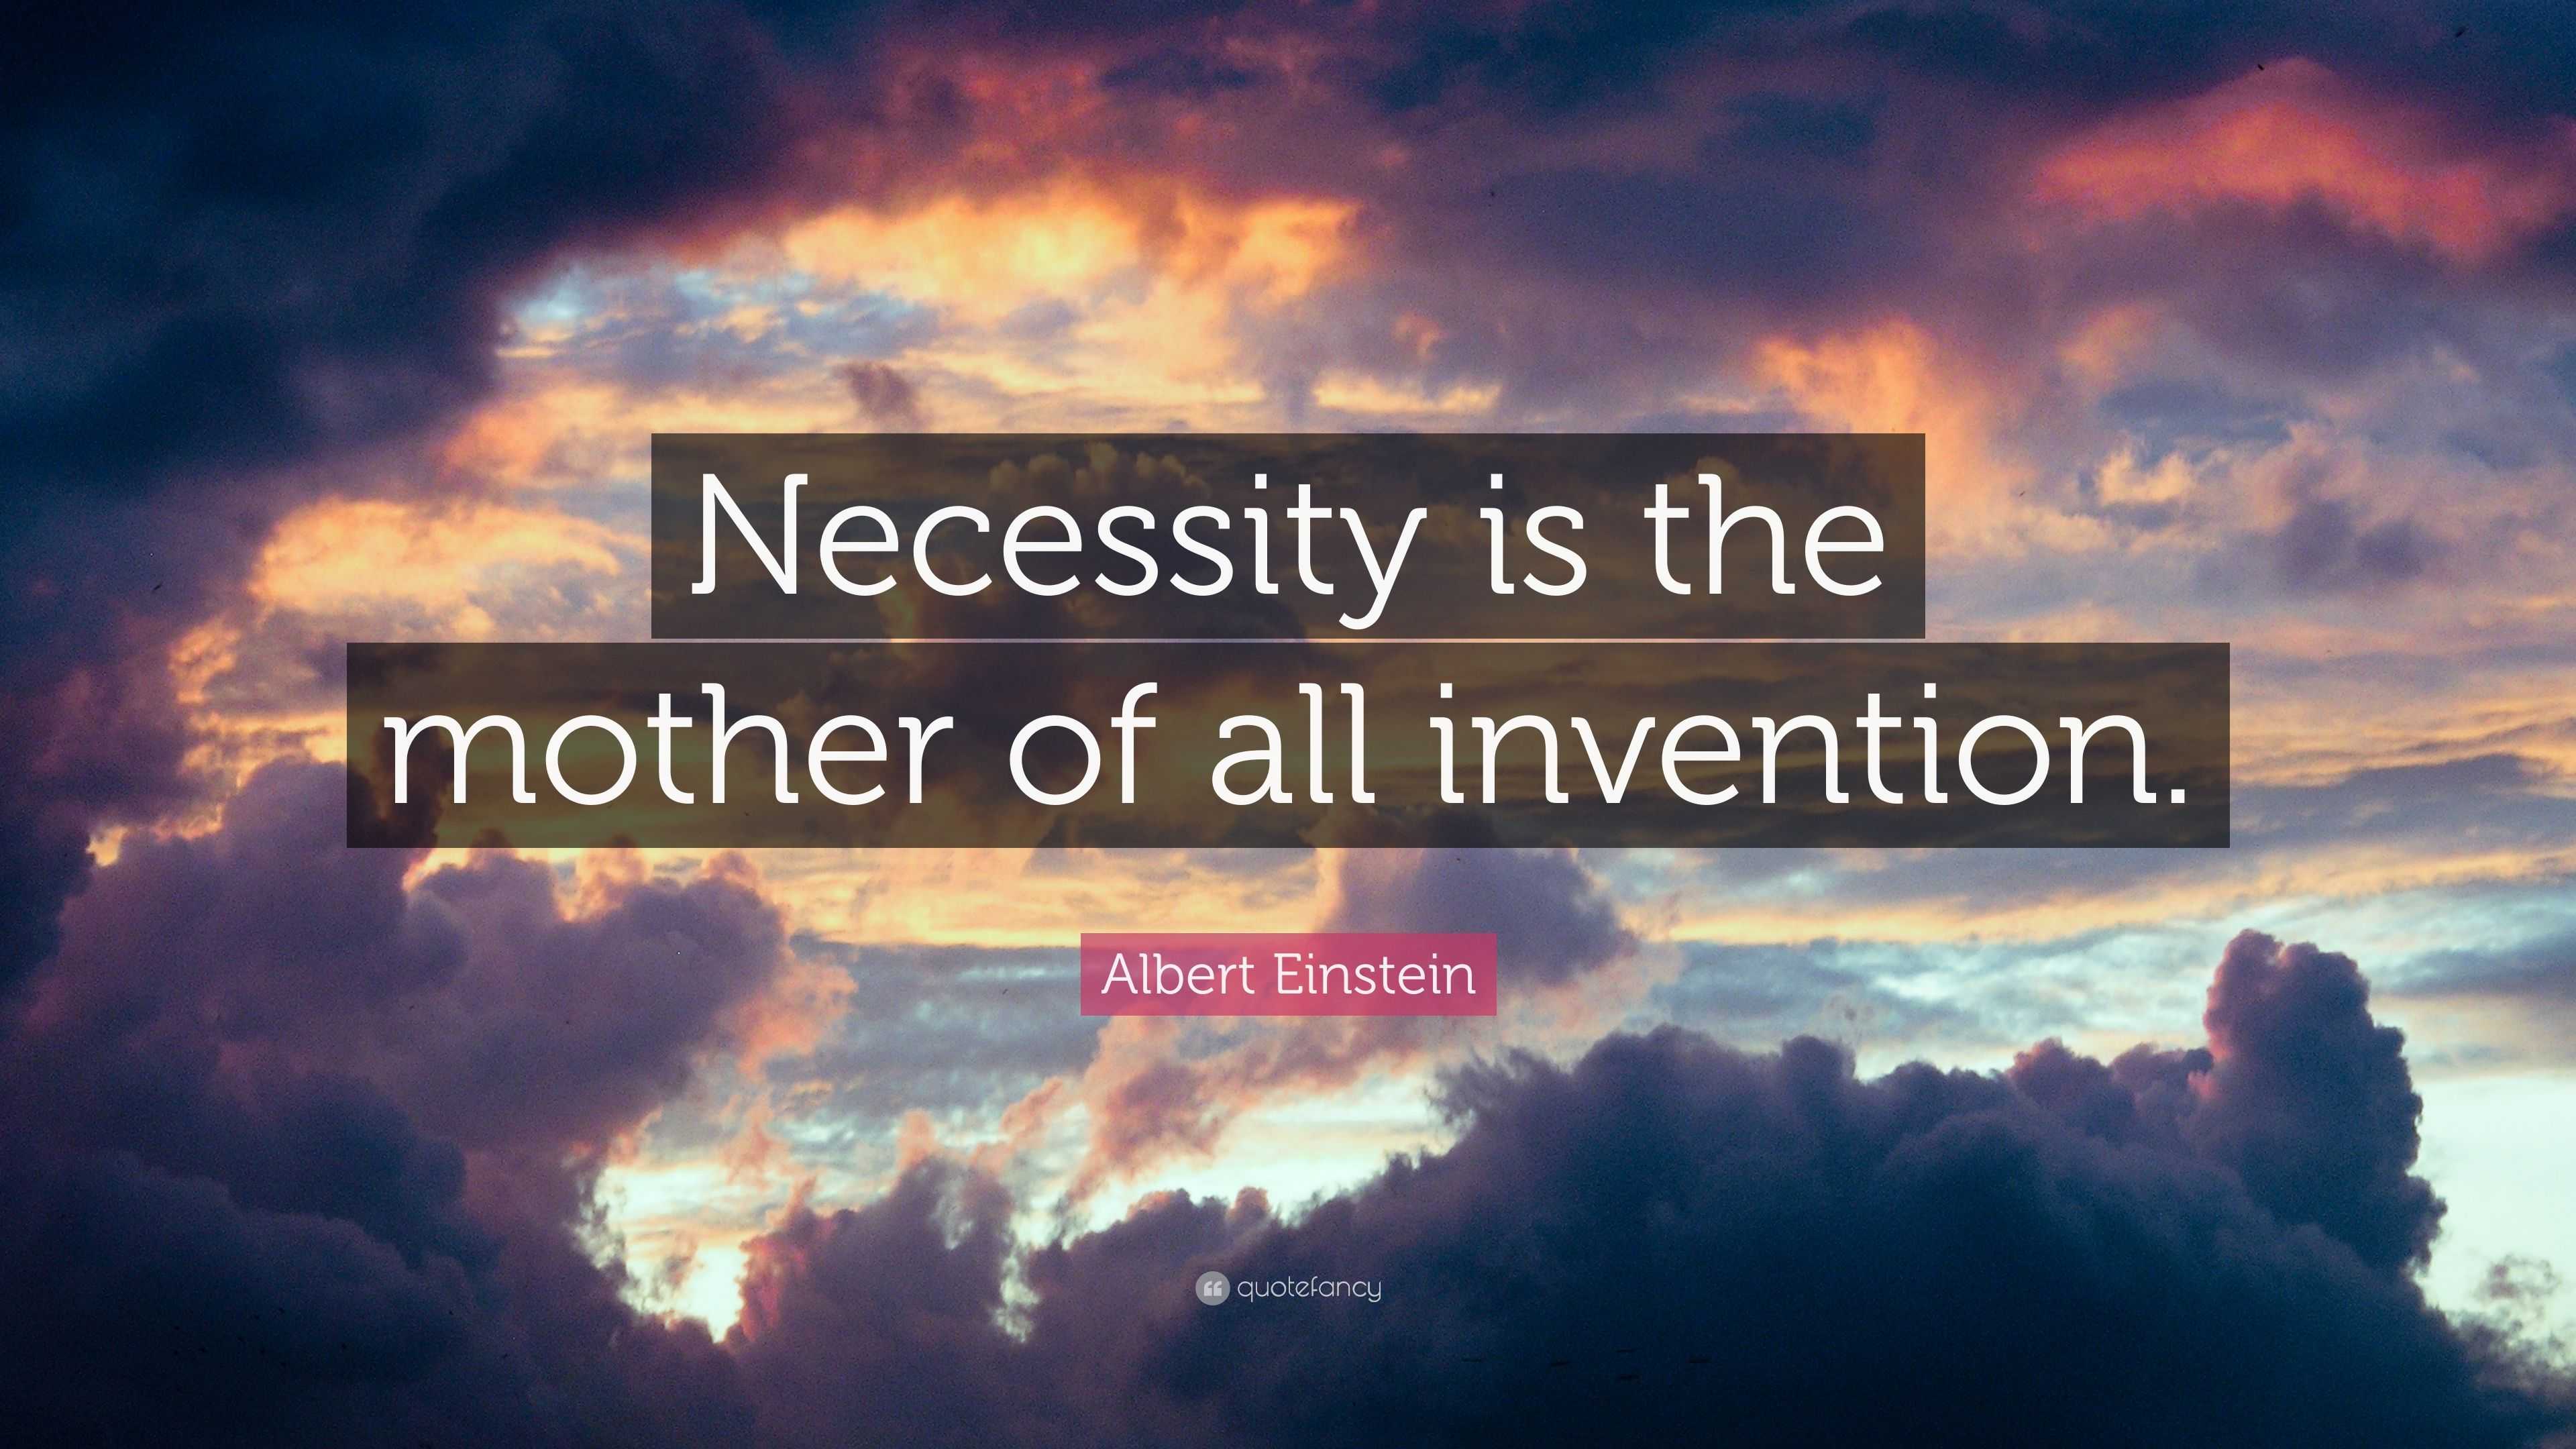 Albert Einstein Quote: Necessity is the mother of all invention